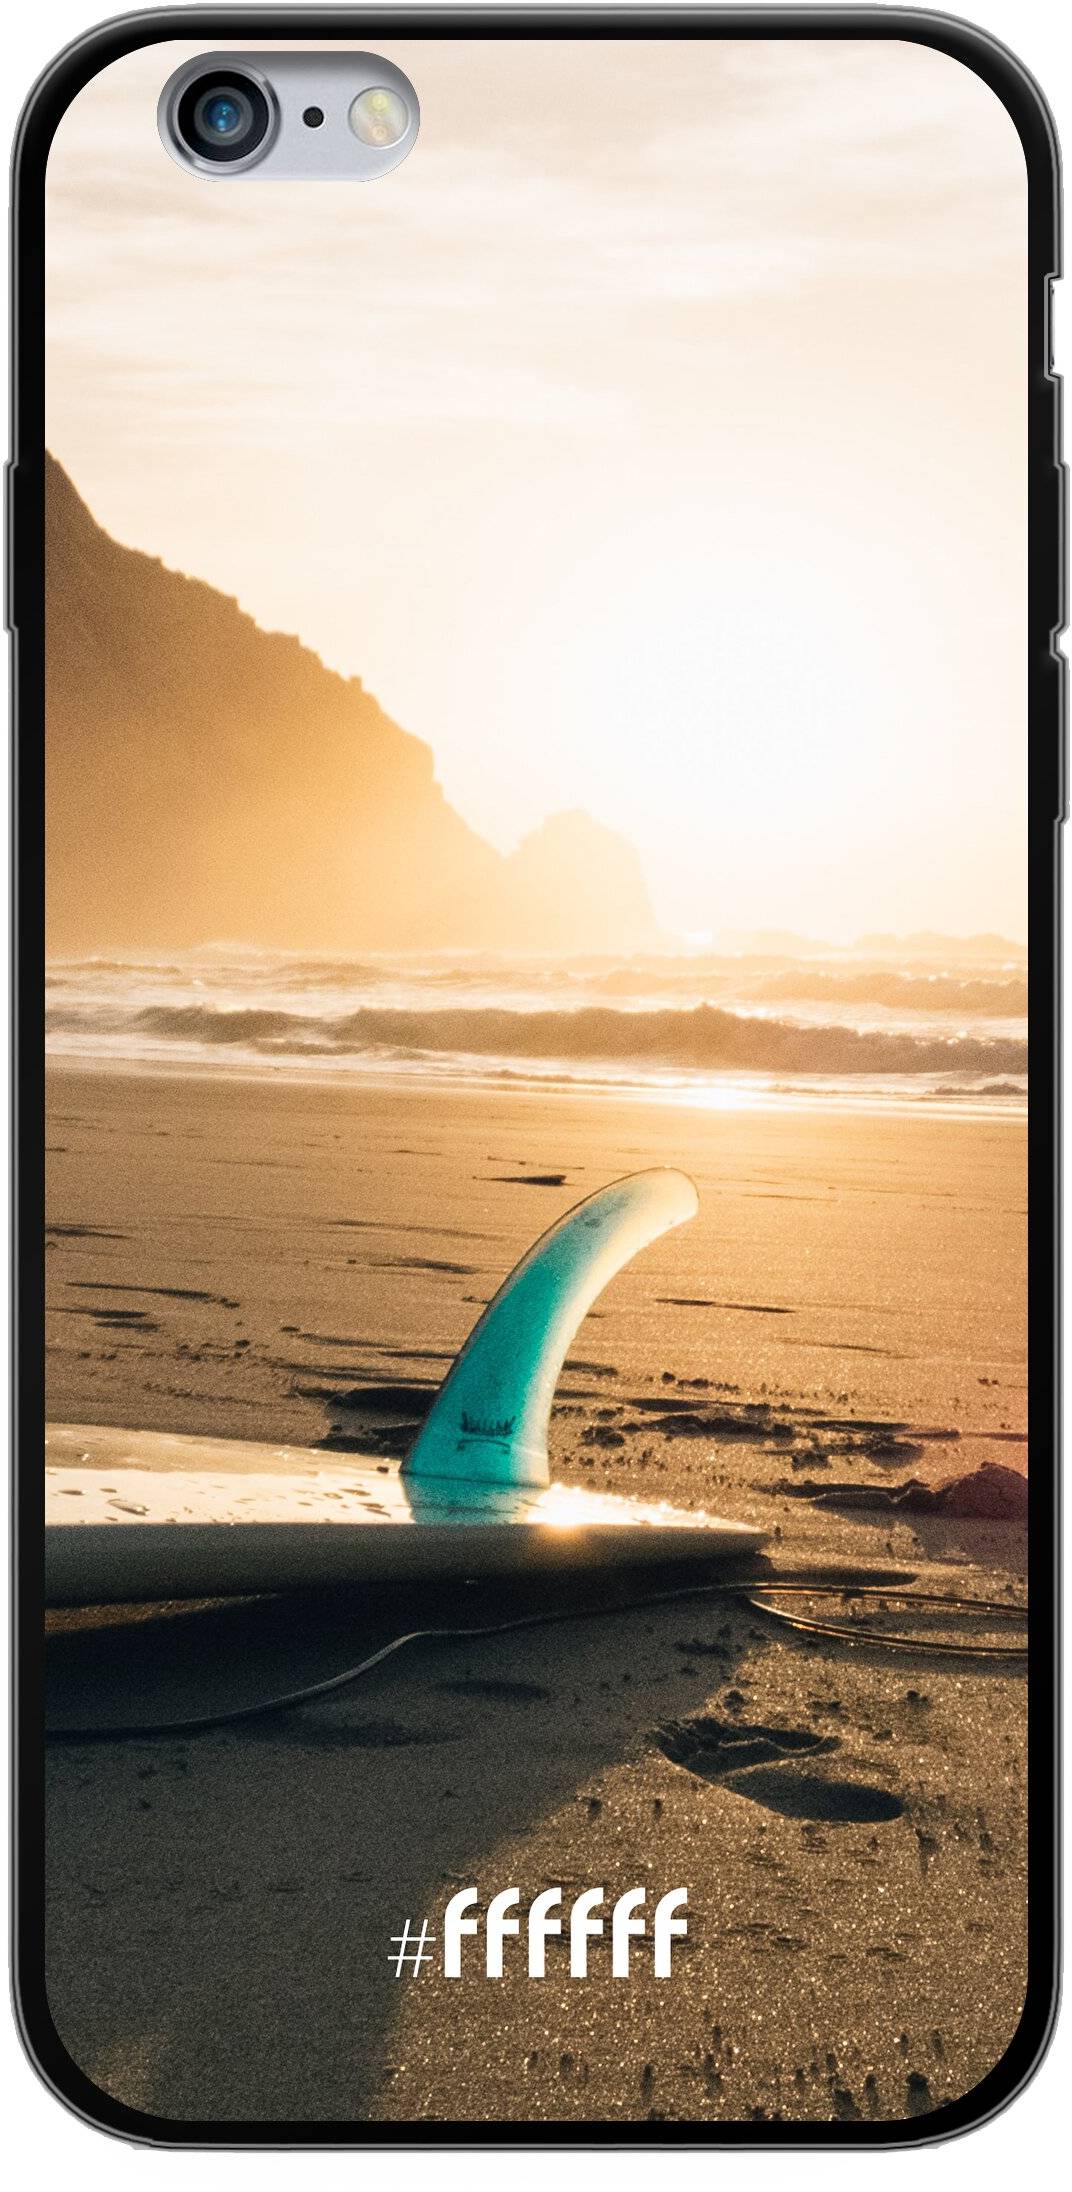 Sunset Surf iPhone 6